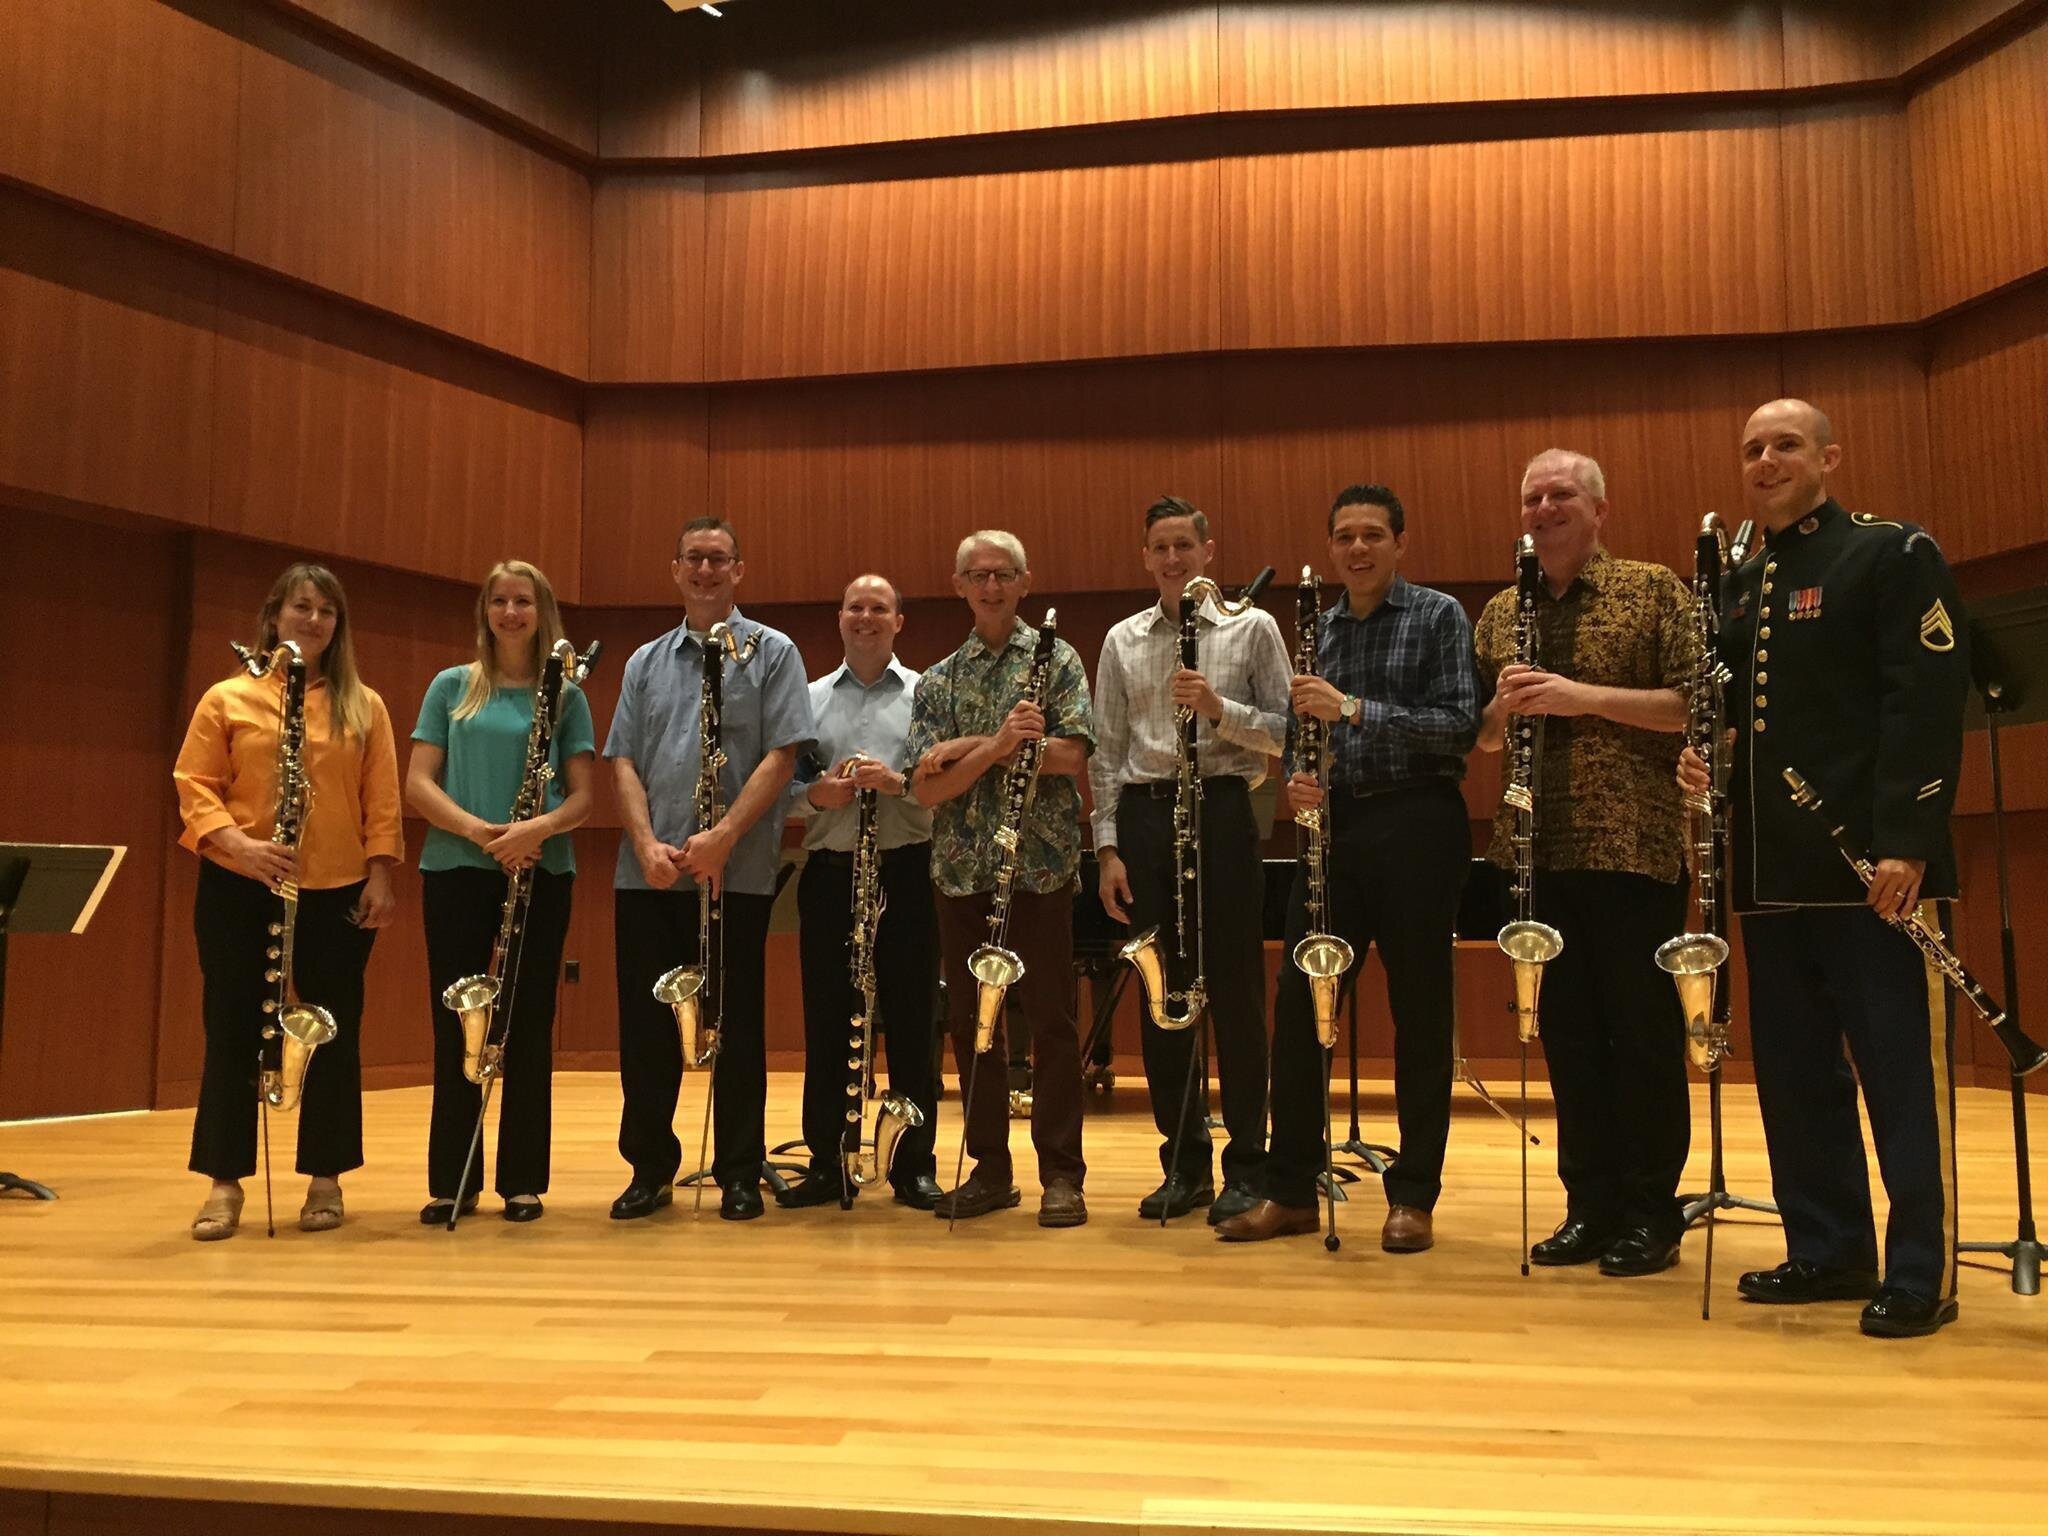  “J. Lawrie Bloom and Friends”  International Clarinet Association: ClarinetFest 2016 